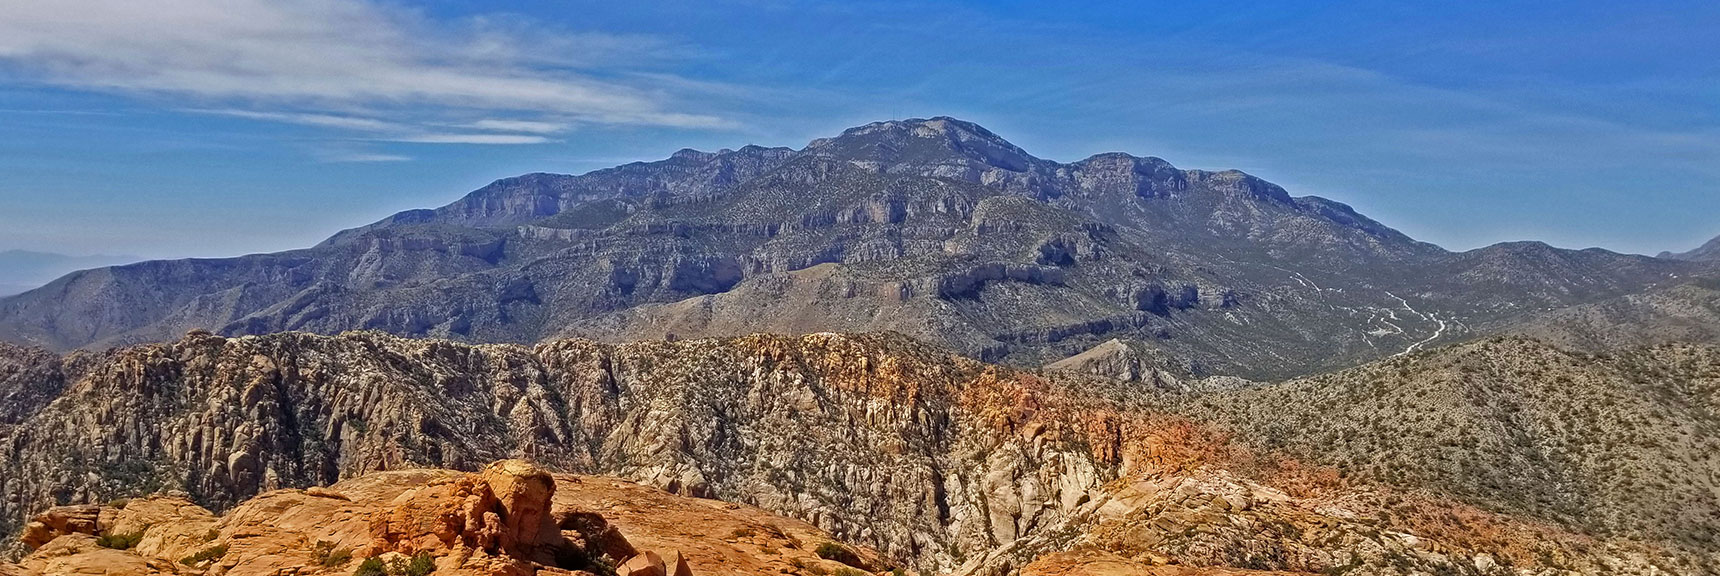 Potosi Mountain to the South of Windy Peak Summit | Windy Peak | Rainbow Mountain Wilderness, Nevada